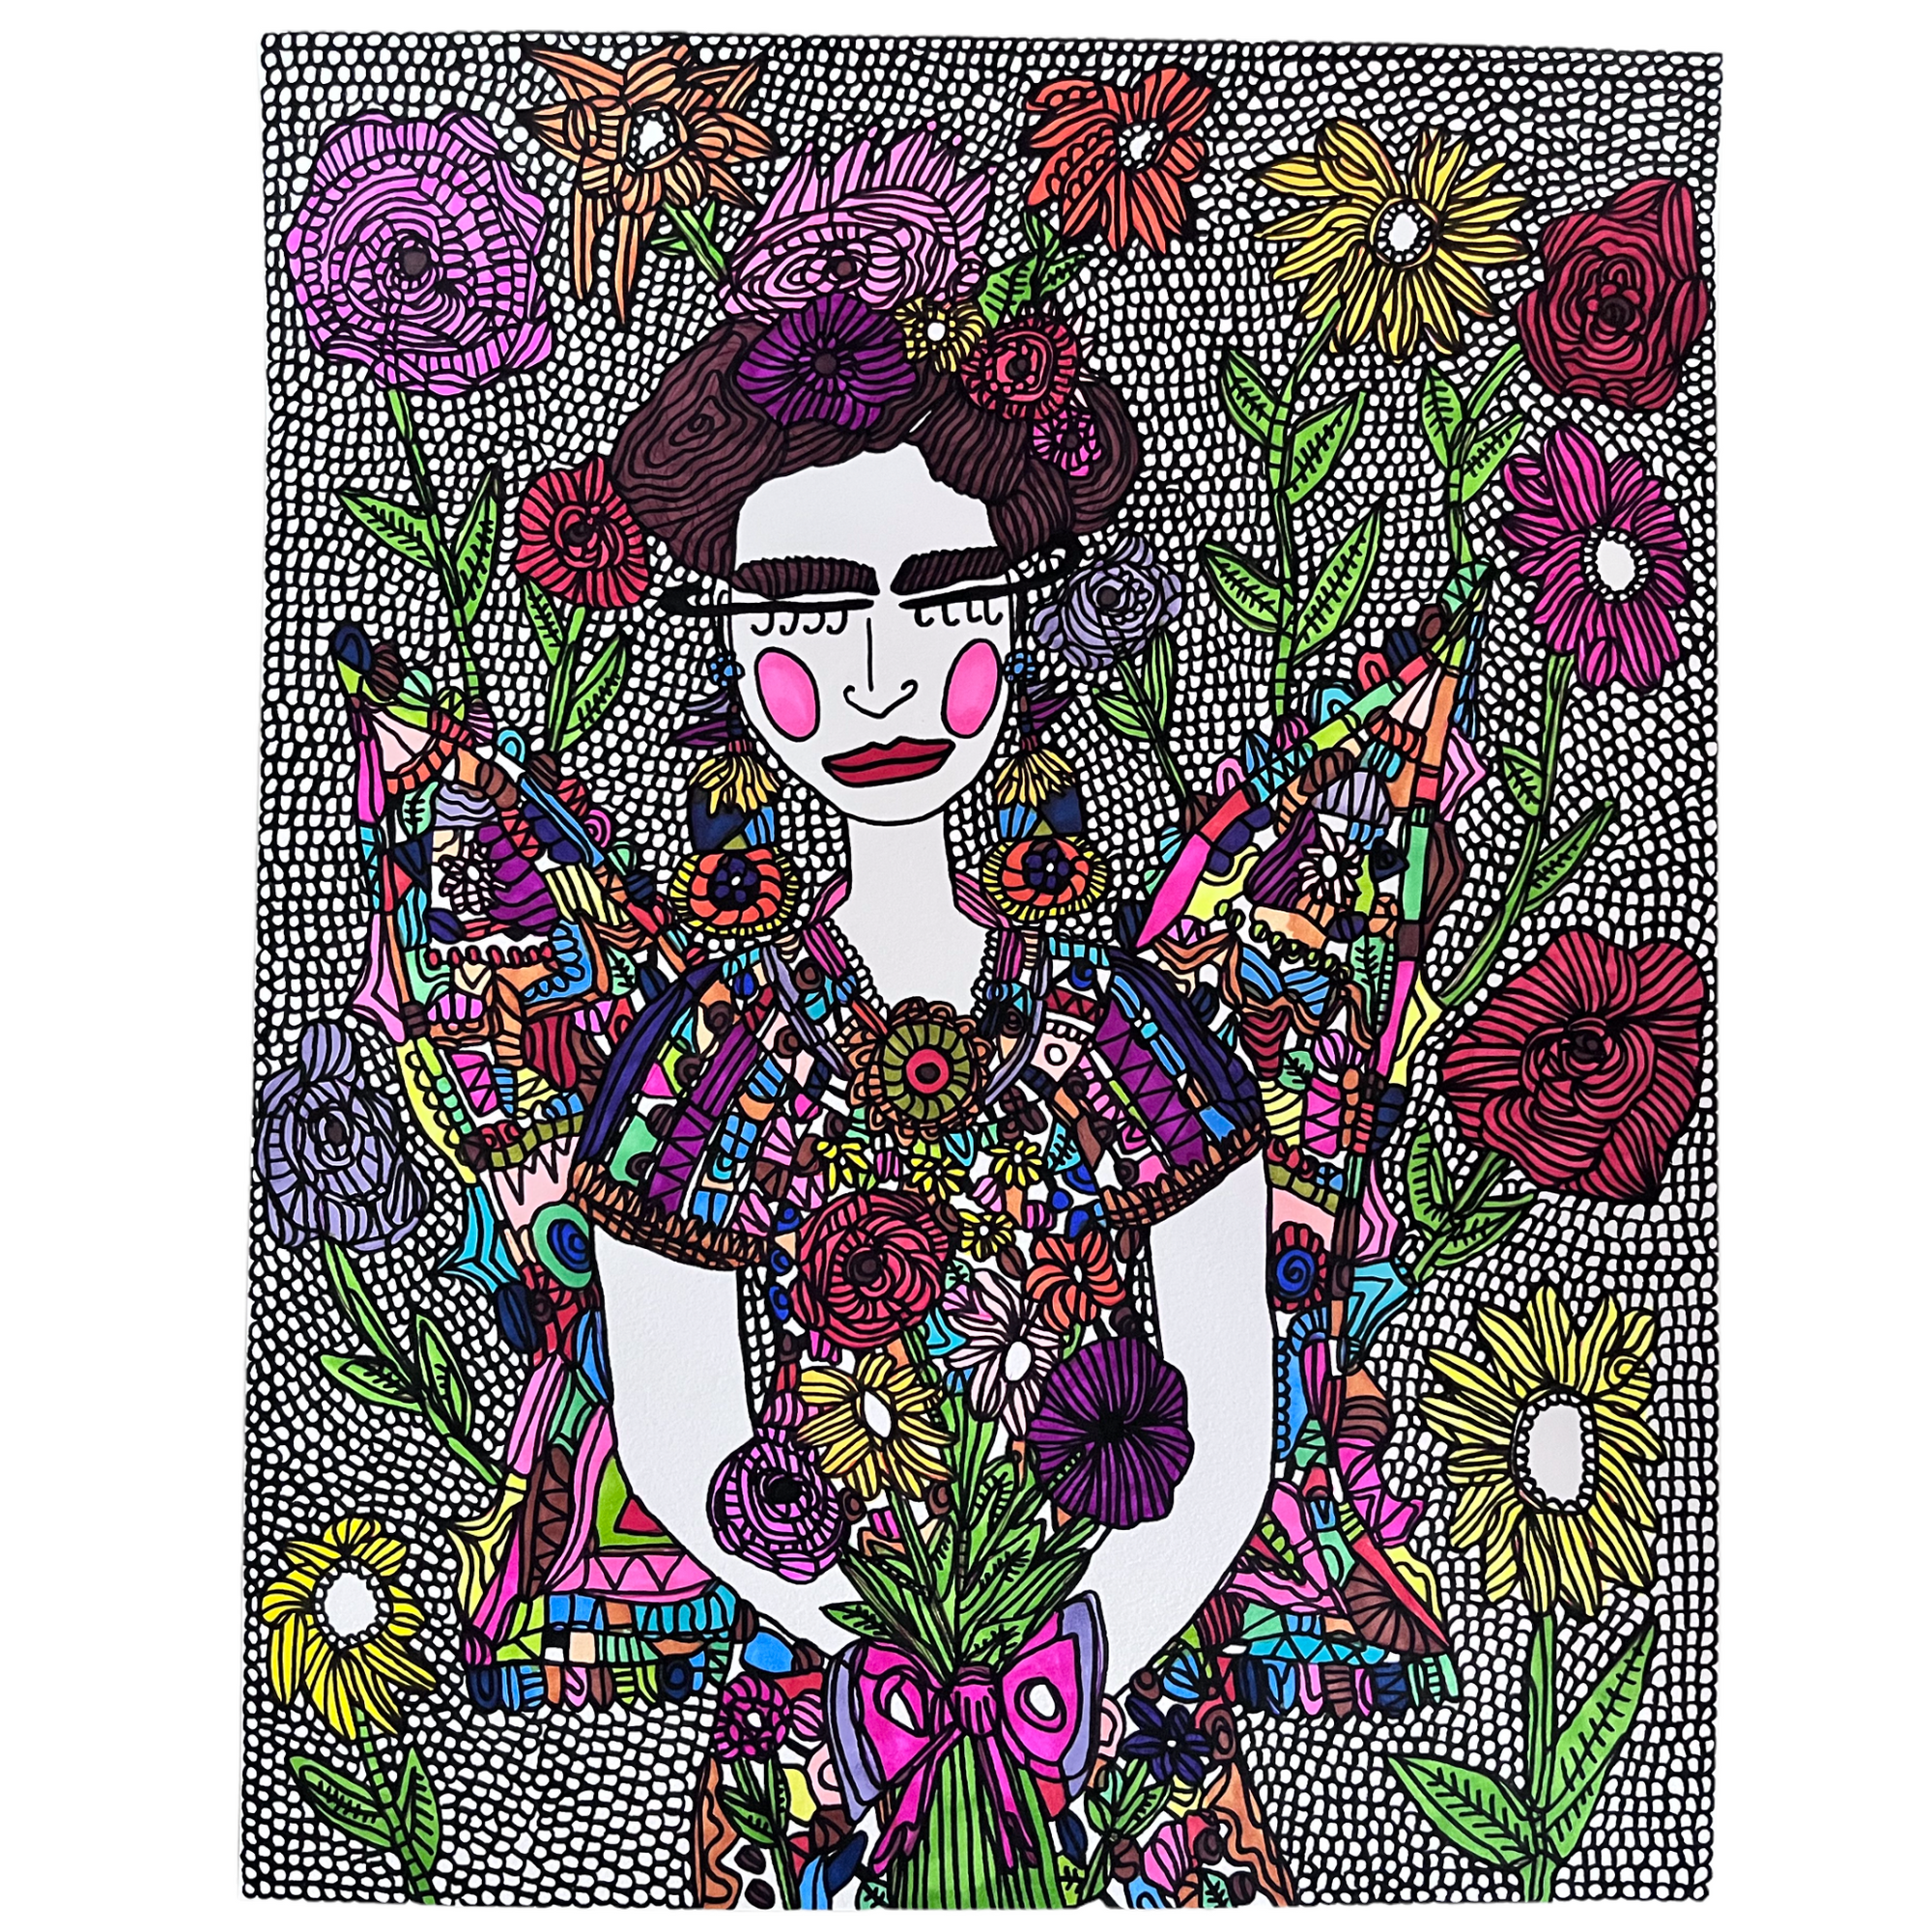 A fashion drawing inspired by Frida K by Antayjo Art